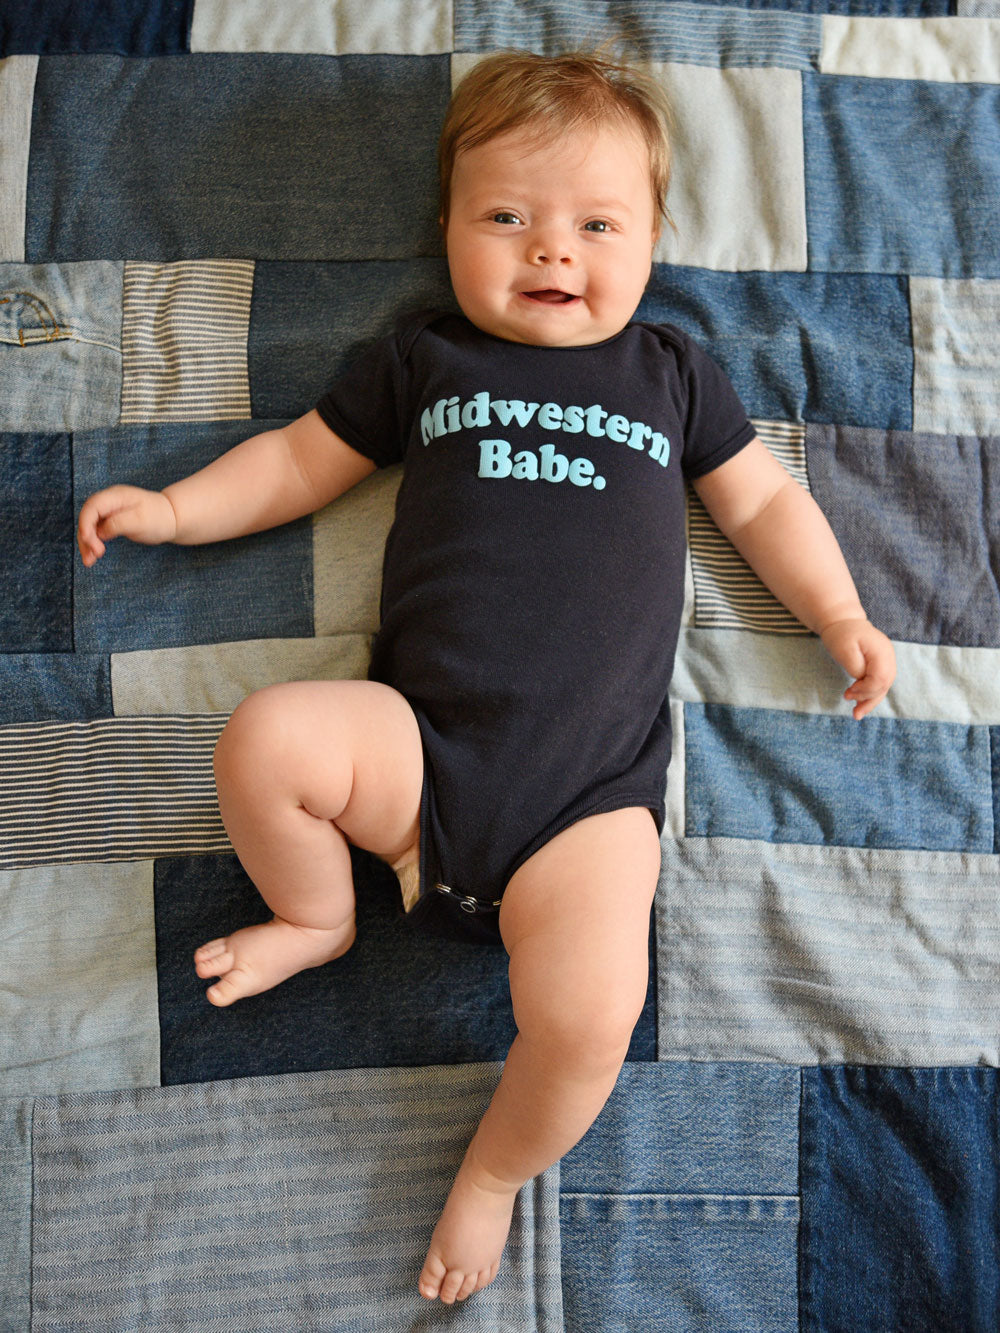 Midwestern Babe navy infant bodysuit on baby on denim quilt